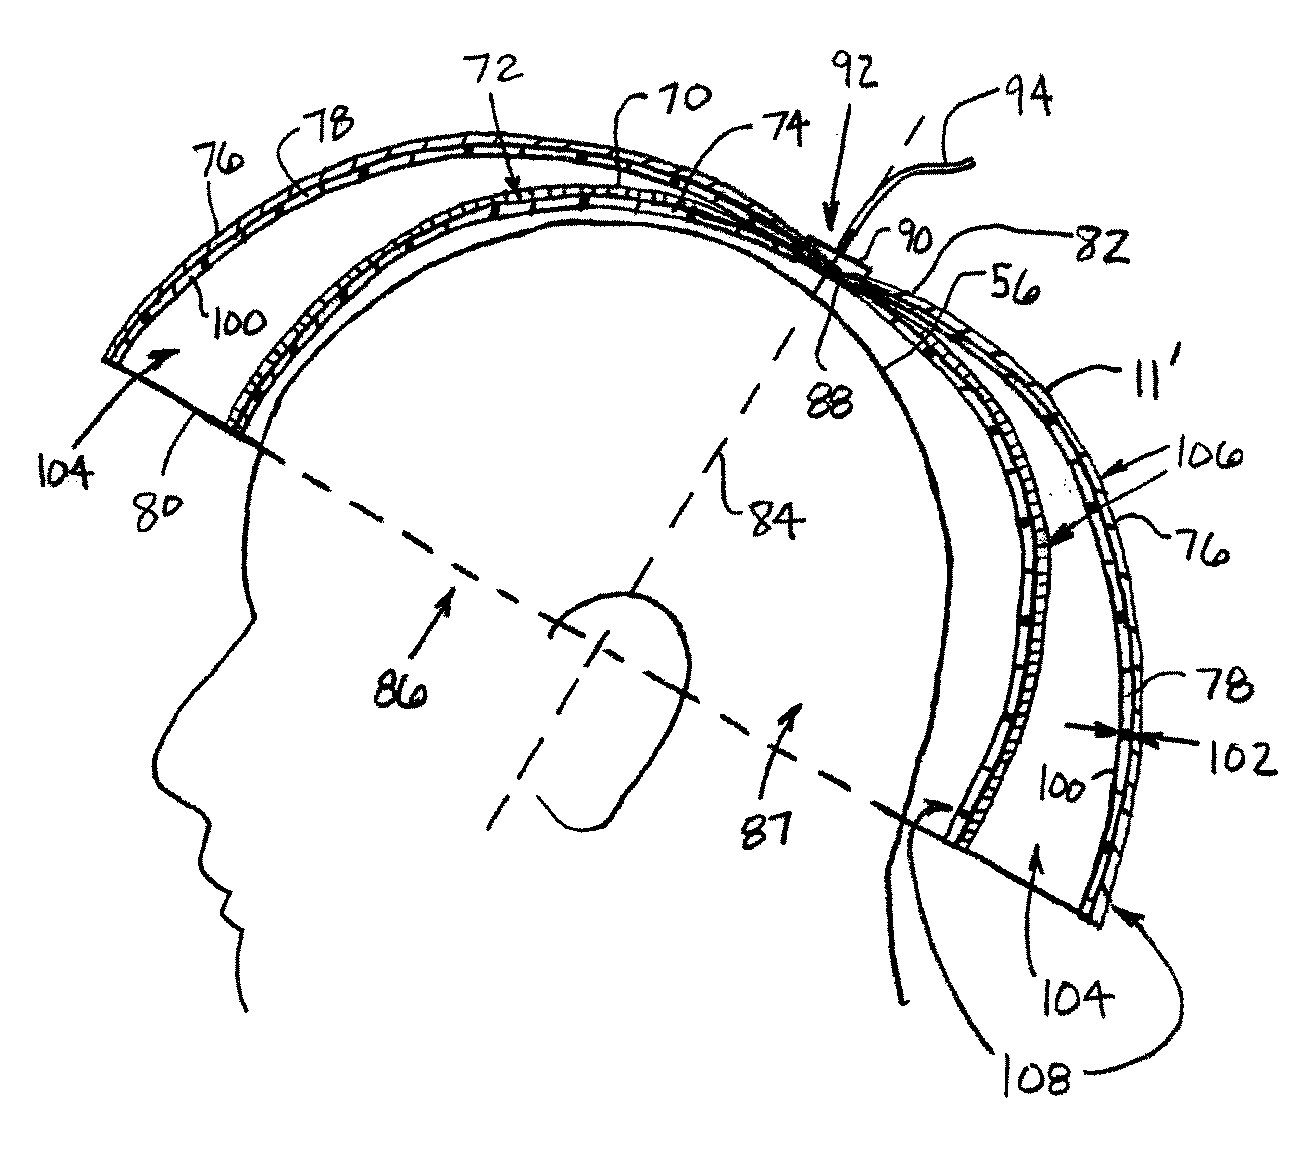 Shielded dome resonator for mr scanning of a cerebrum